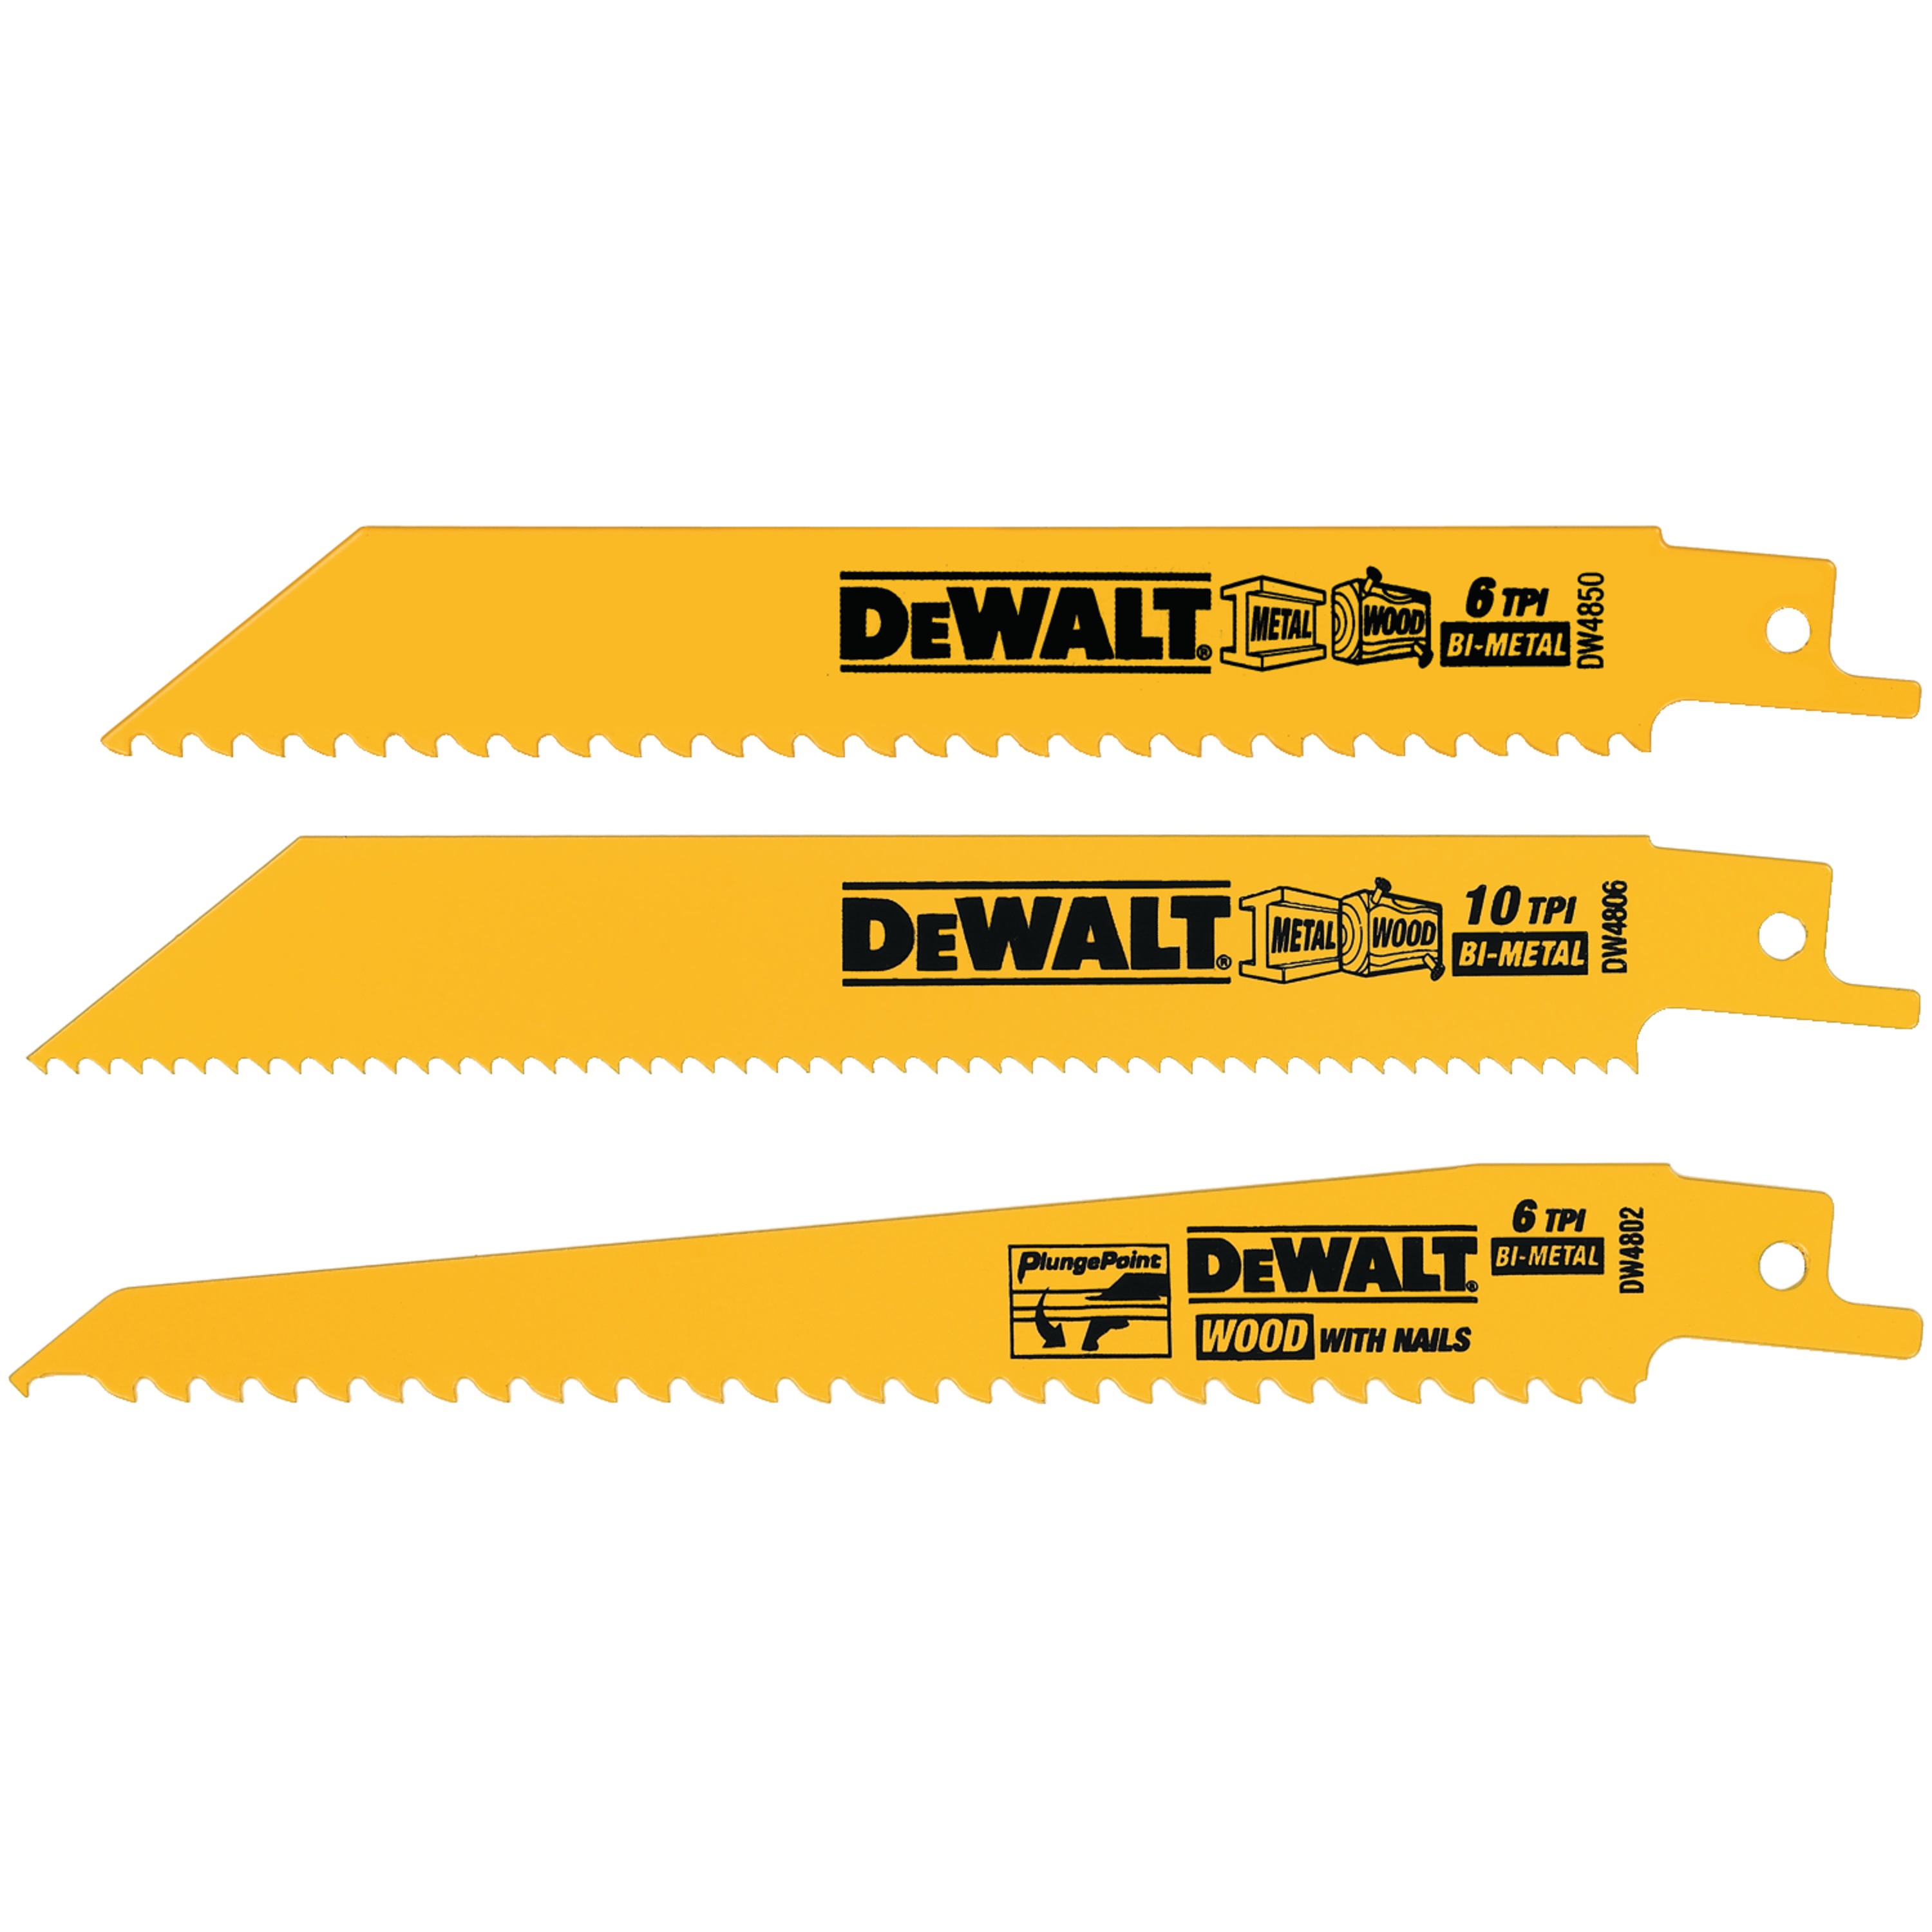 DEWALT - 3 Piece BiMetal Reciprocating Saw Blade Set - DW4853